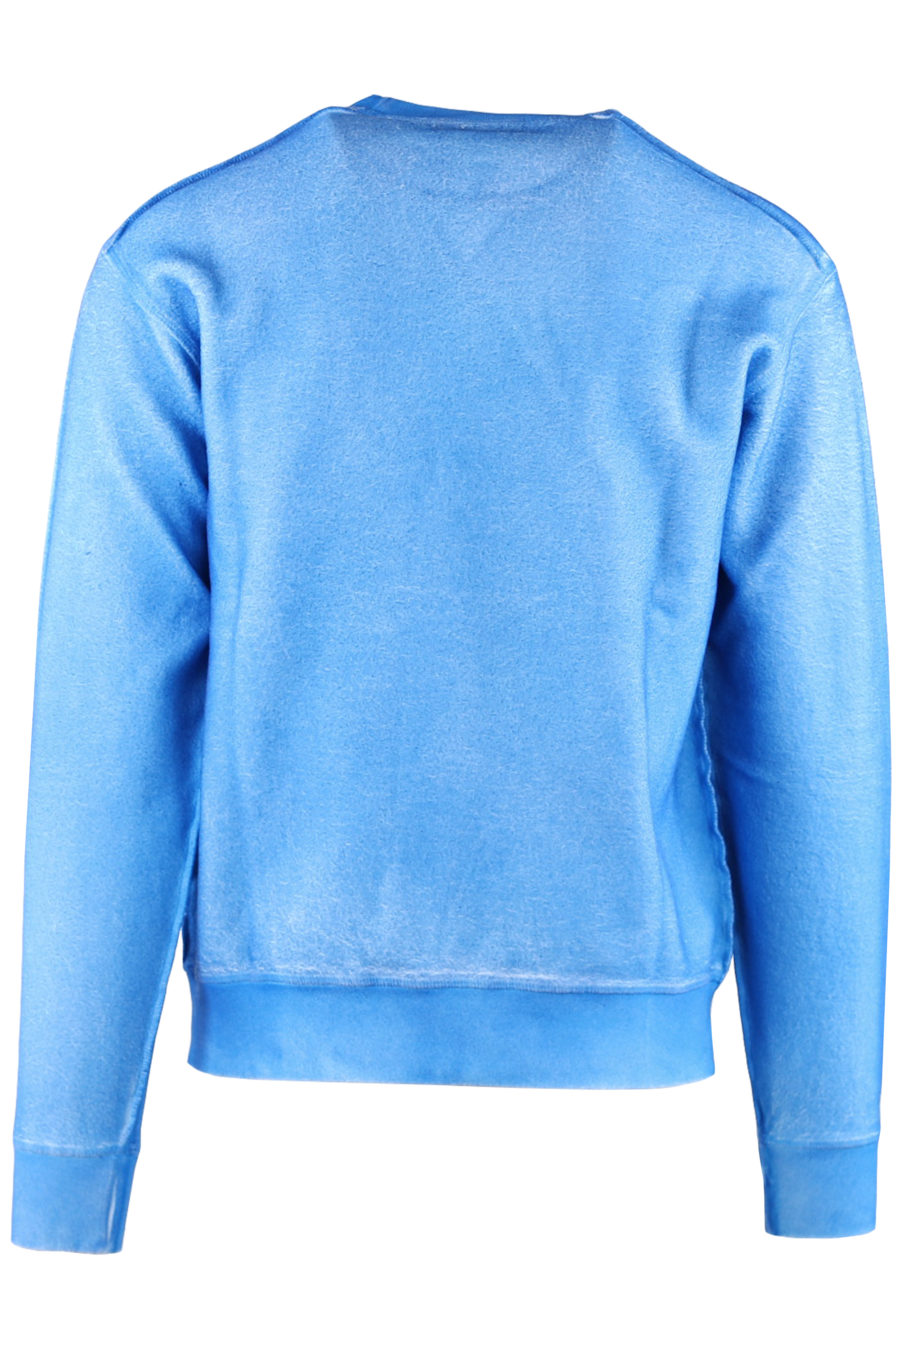 Camisola de lã azul com logótipo branco - 01a70e81438238f68d97a6ac4e90831a6f35f614